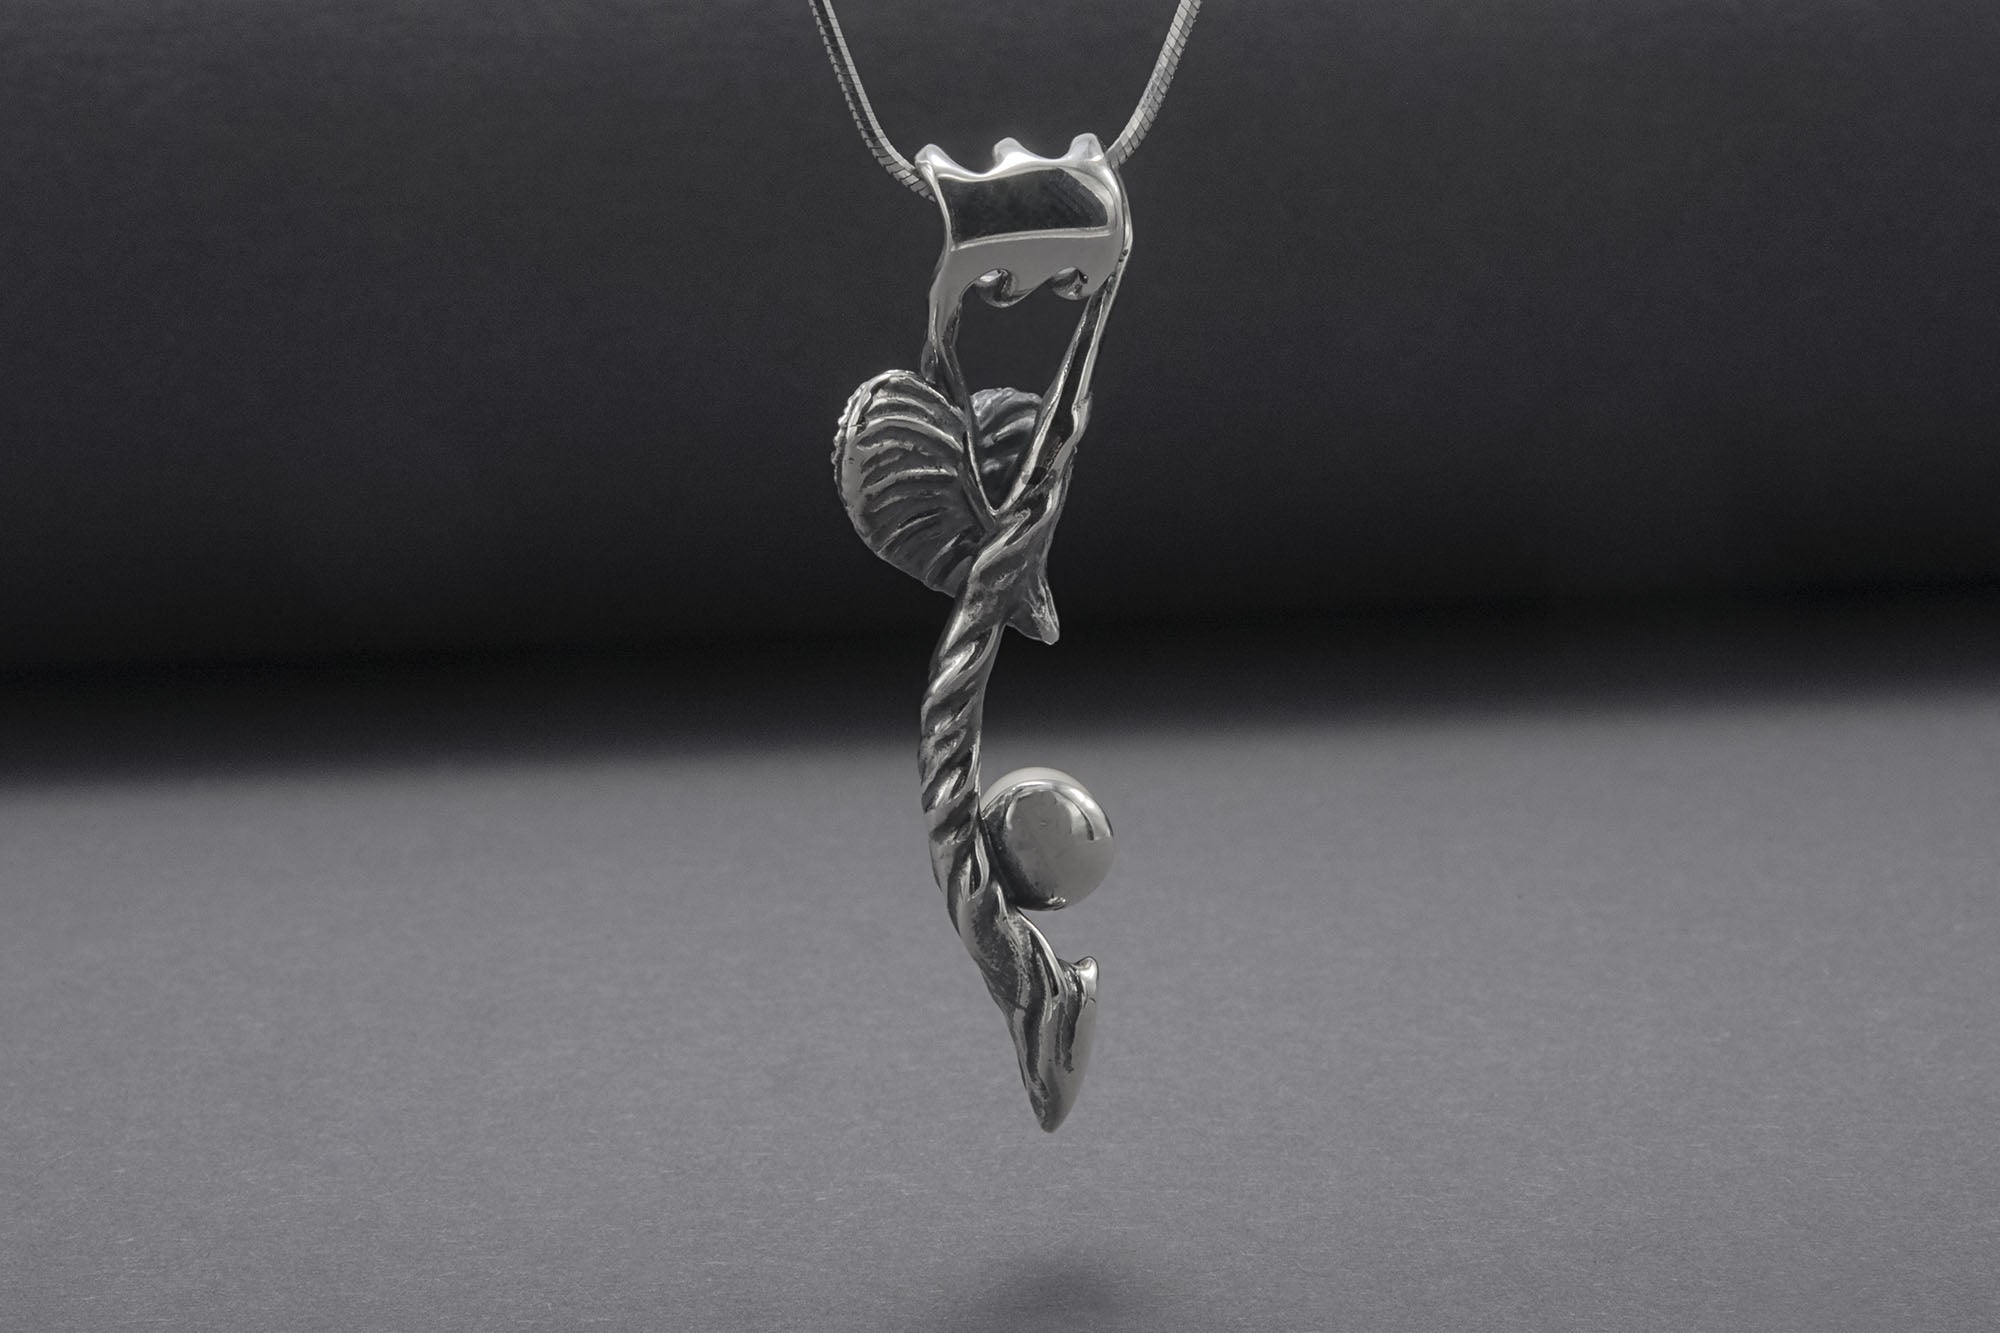 925 Silver Ivy Pendant With Pearl, Handmade Jewelry - vikingworkshop